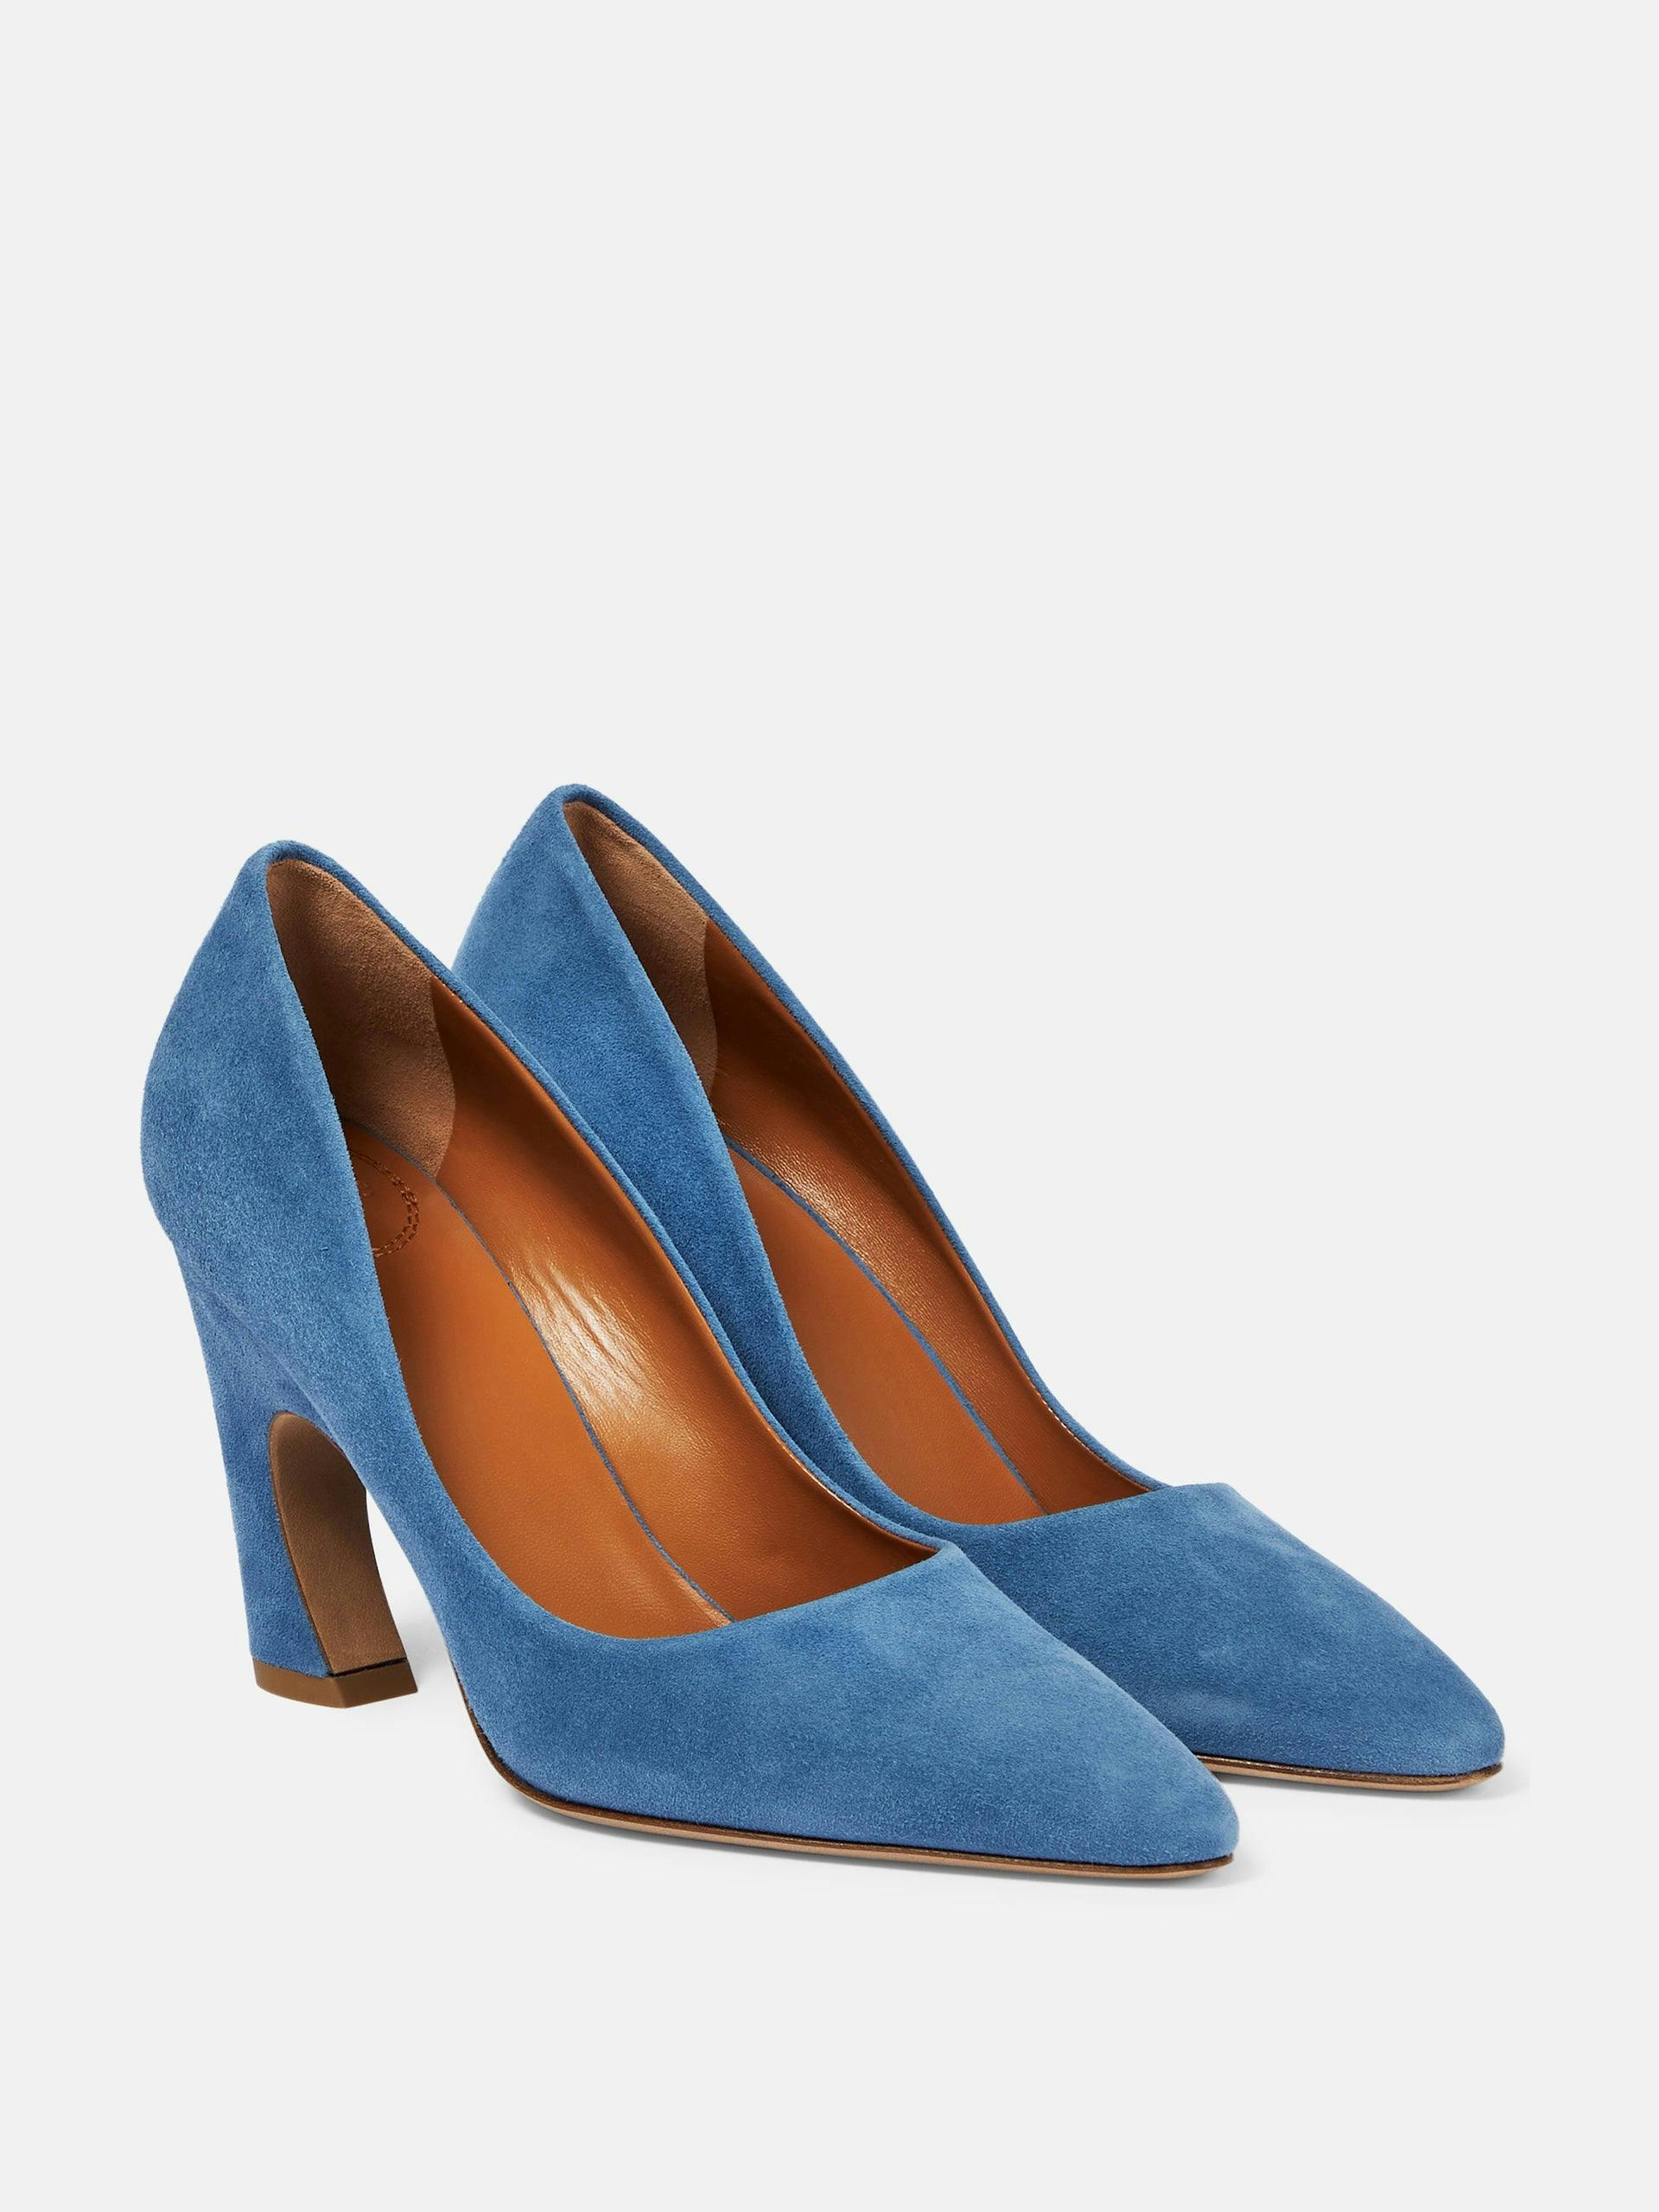 Blue suede heeled pumps